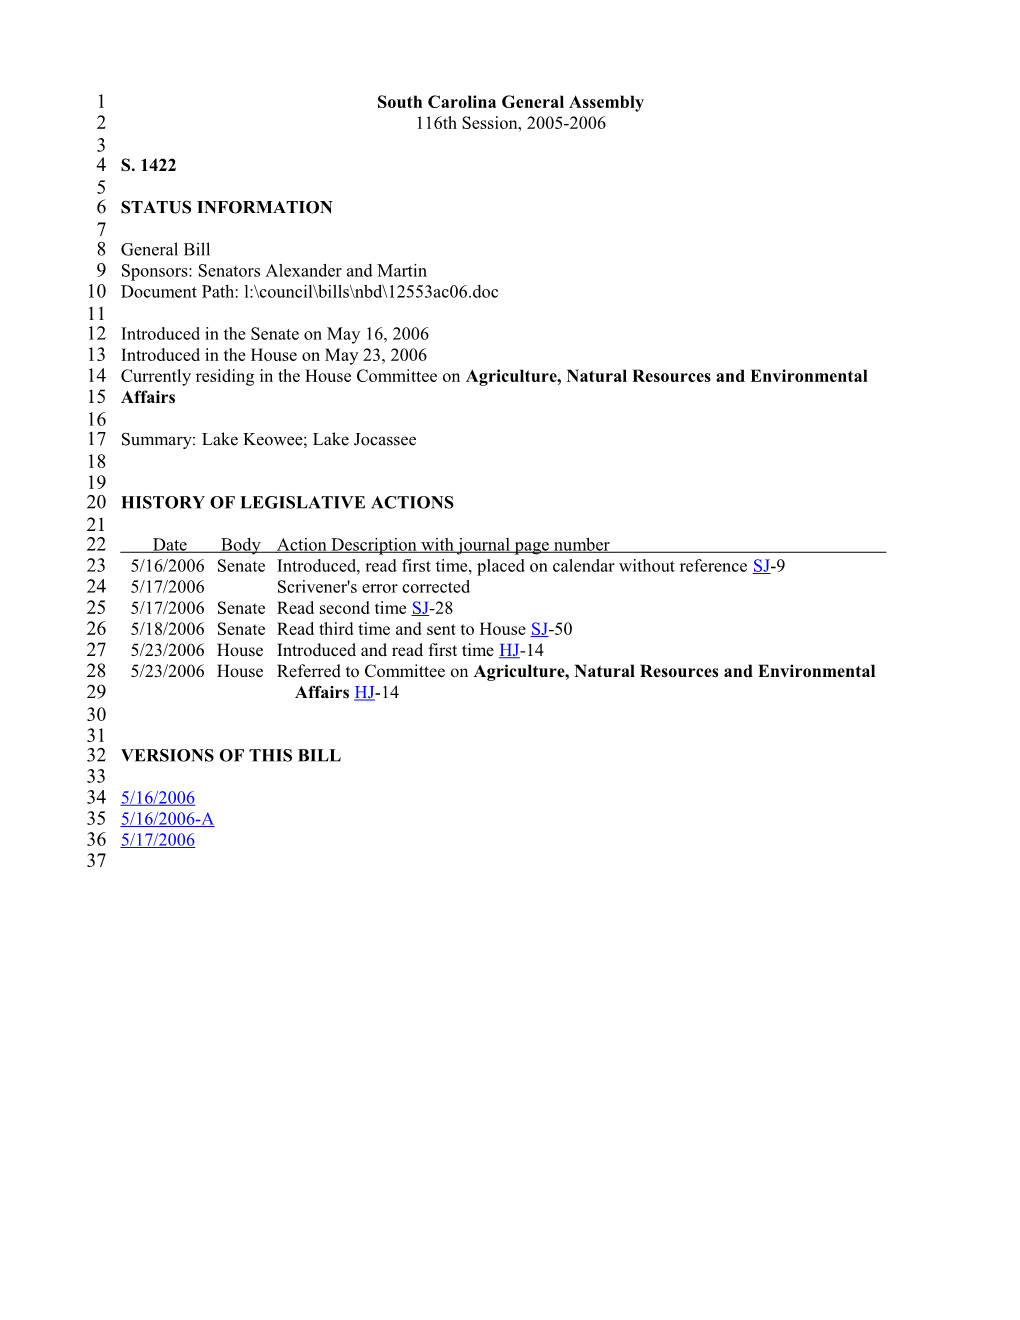 2005-2006 Bill 1422: Lake Keowee; Lake Jocassee - South Carolina Legislature Online